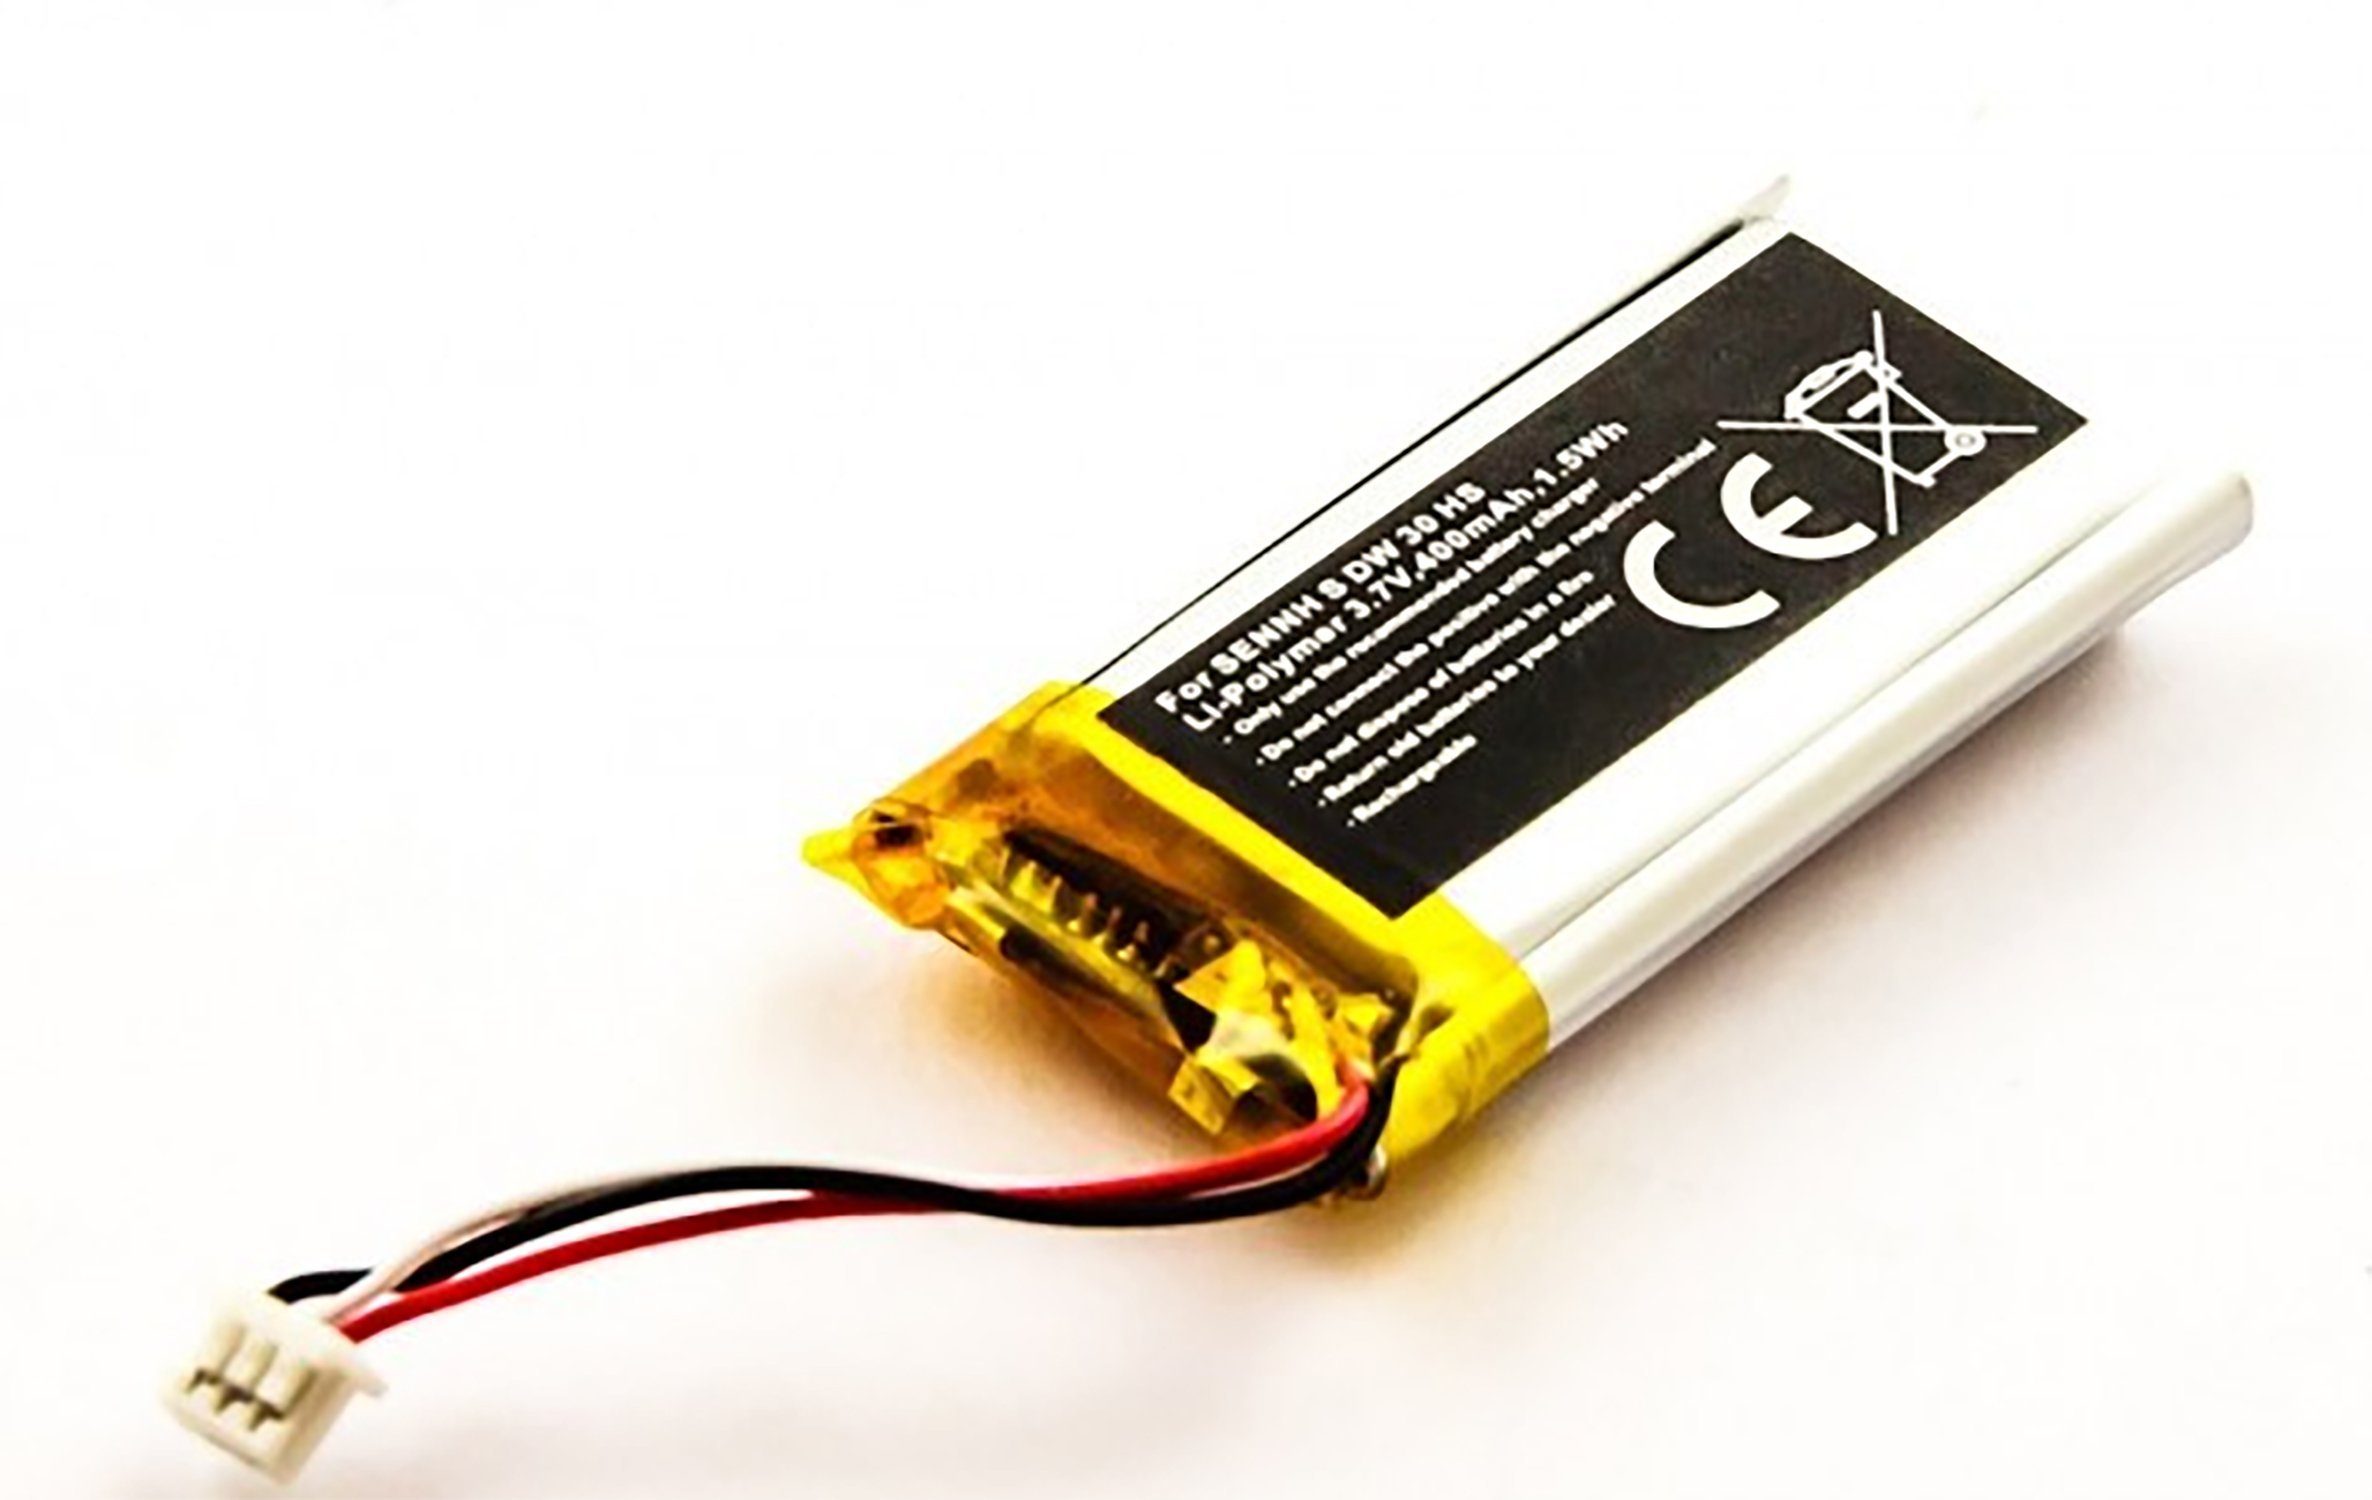 1x B250 or B250-1 Sennheiser Batterypack Batteriefach for 3xAA Batteries 